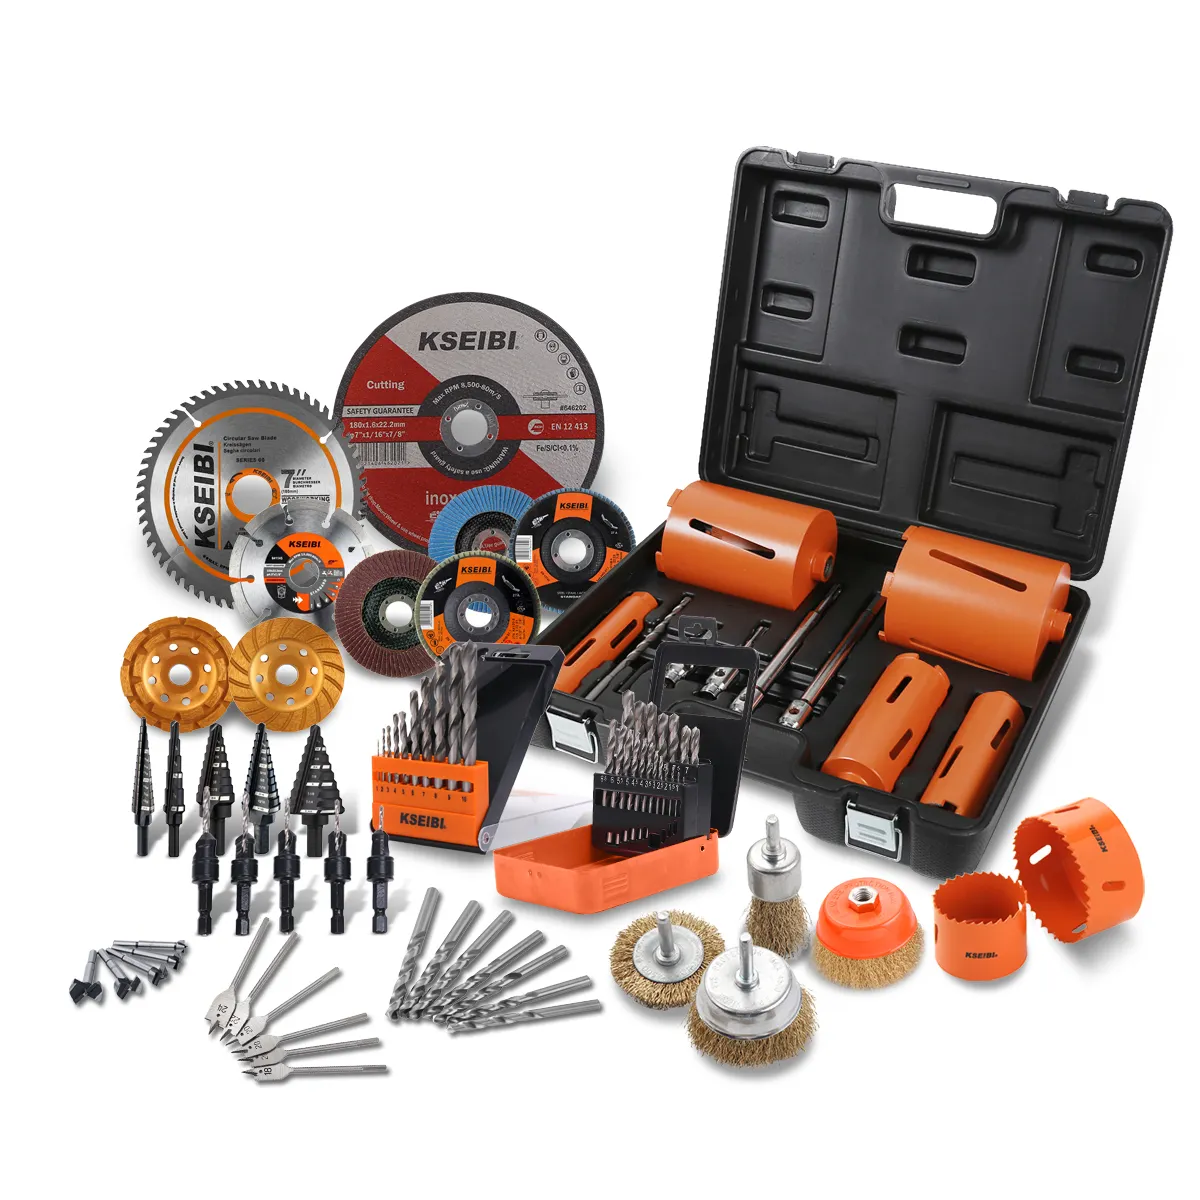 KSEIBI Full Range of Power Tools Accessoriesand Other Tools